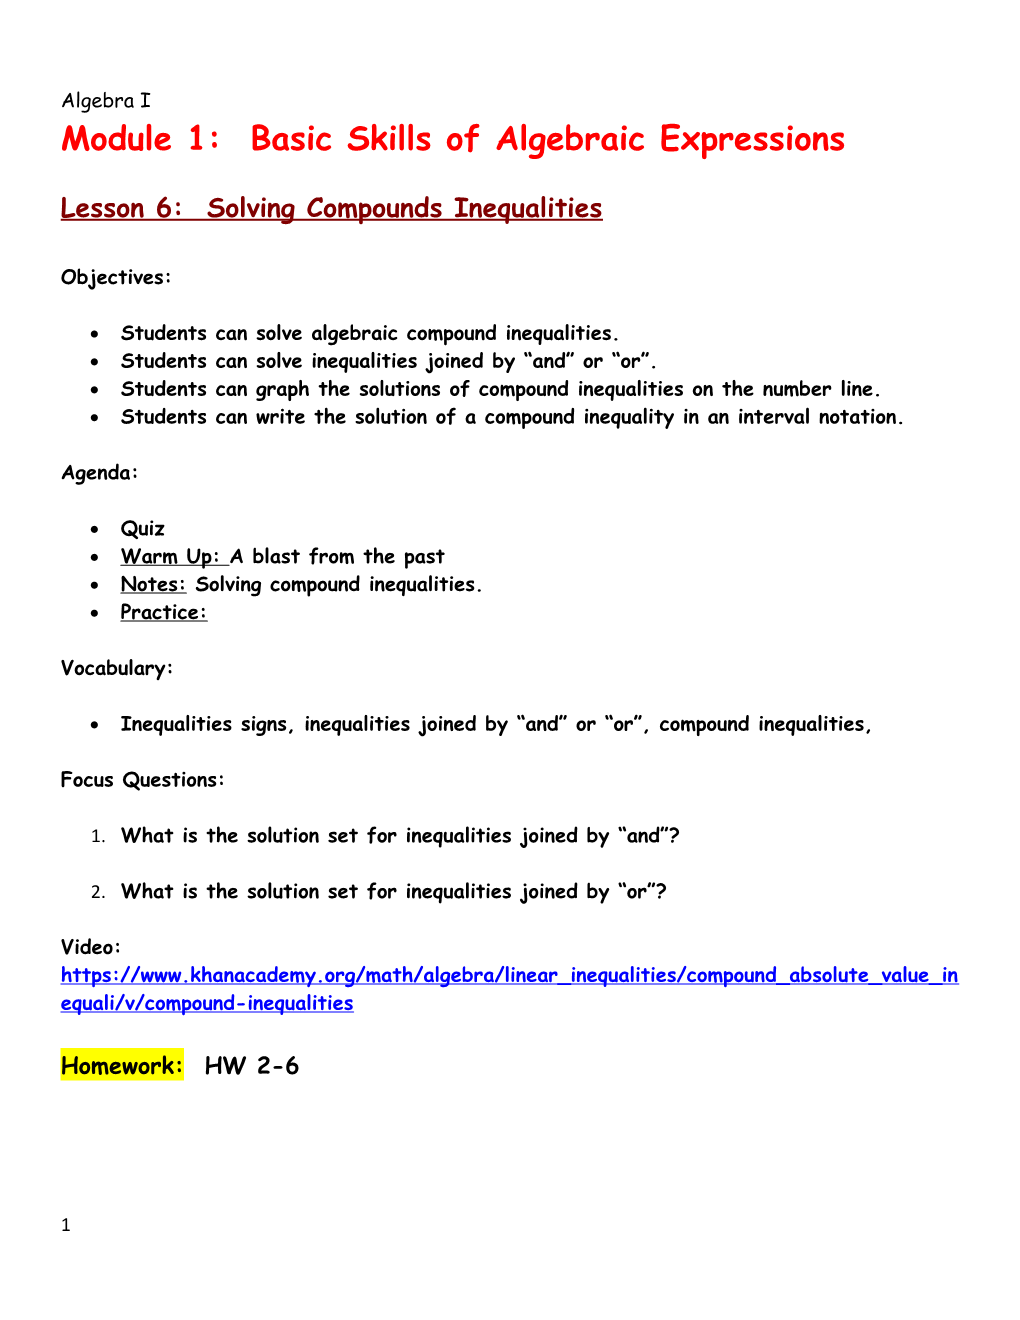 Module 1: Basic Skills of Algebraic Expressions